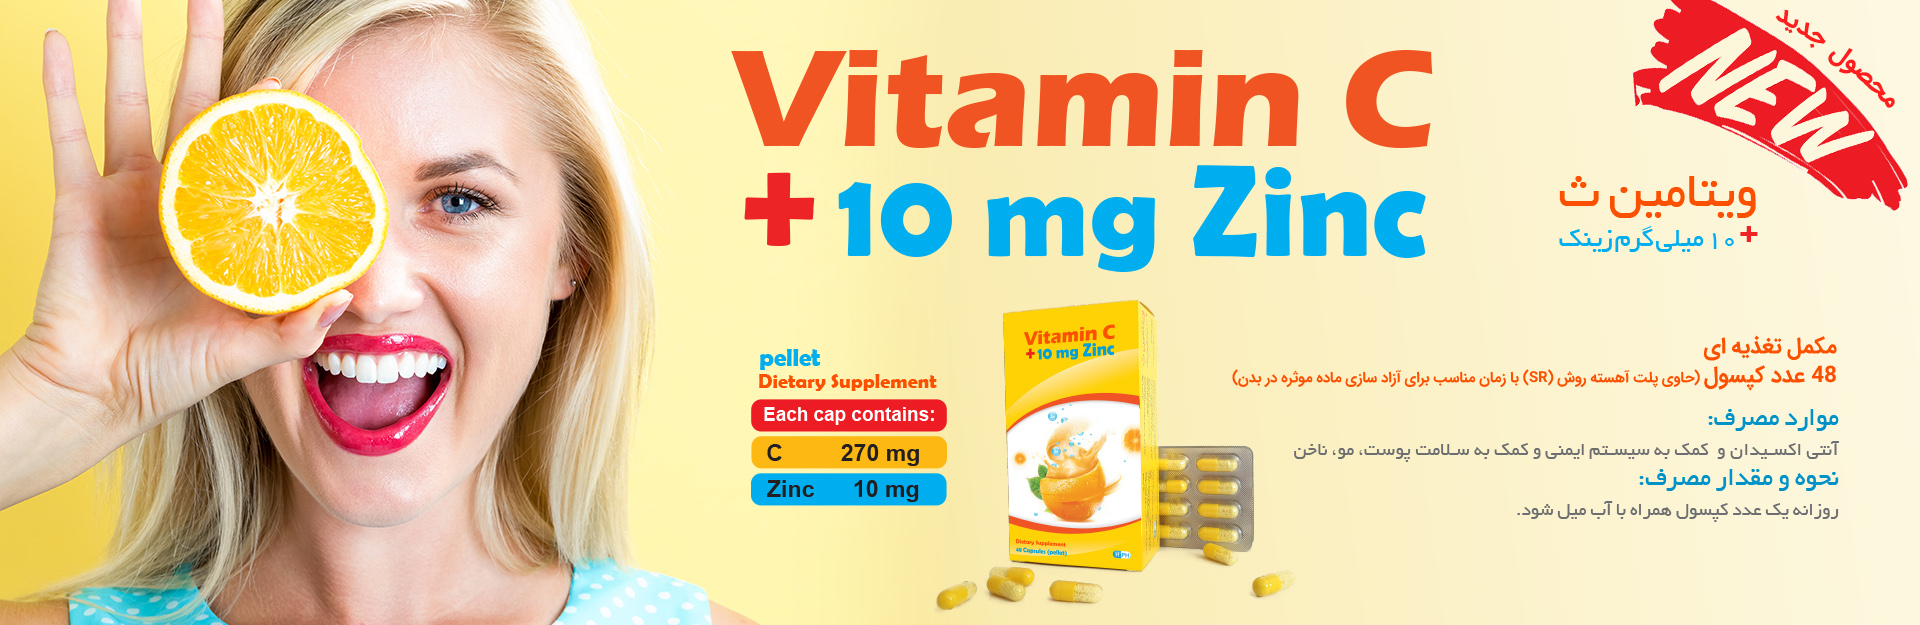 vitamin-c-سلامتی-سلامت-تندرستی-تغذیه-ایران-ویتامین-ث-طب-مشاوره-طبیعت-زندگی-درمان-رژیم-زندگی-پوست-کیفیت-مدرنتناسب-اندام-حال-خوب-انرژی-مثبت-copy Home